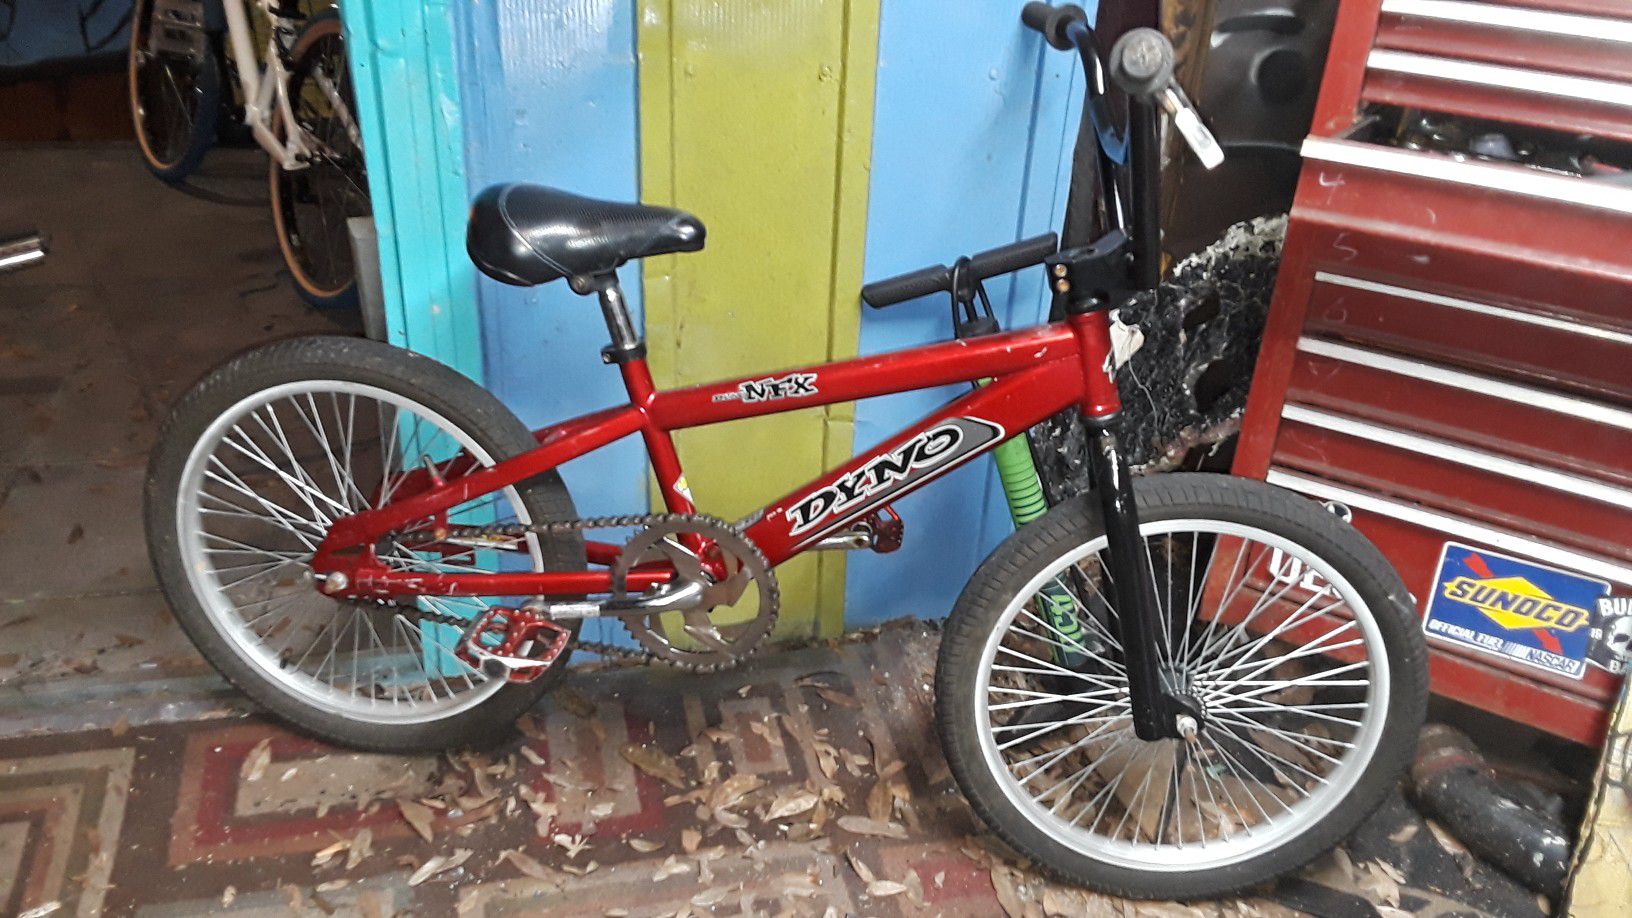 Dyno nfx BMX bike